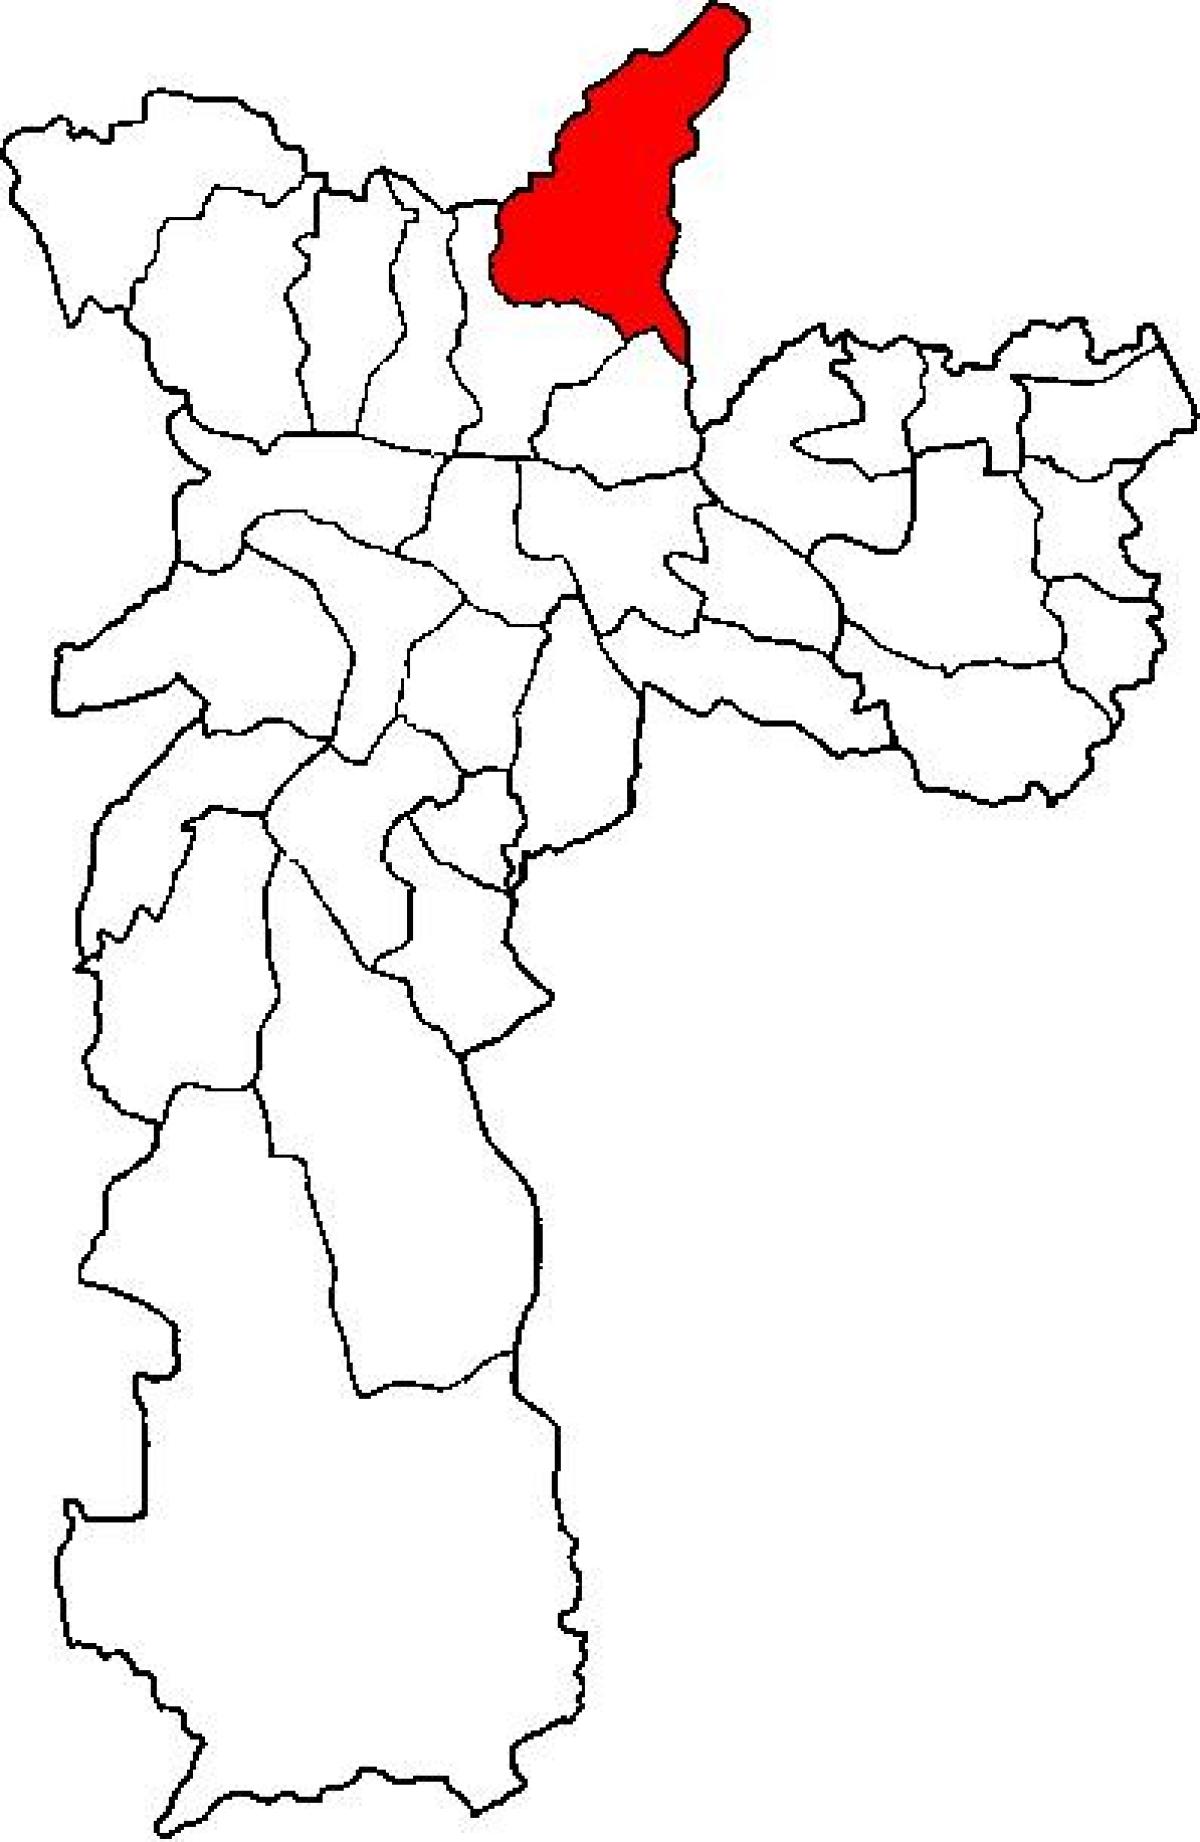 Карта Jaçanã-Tremembé супрефектур Сан-Паўлу